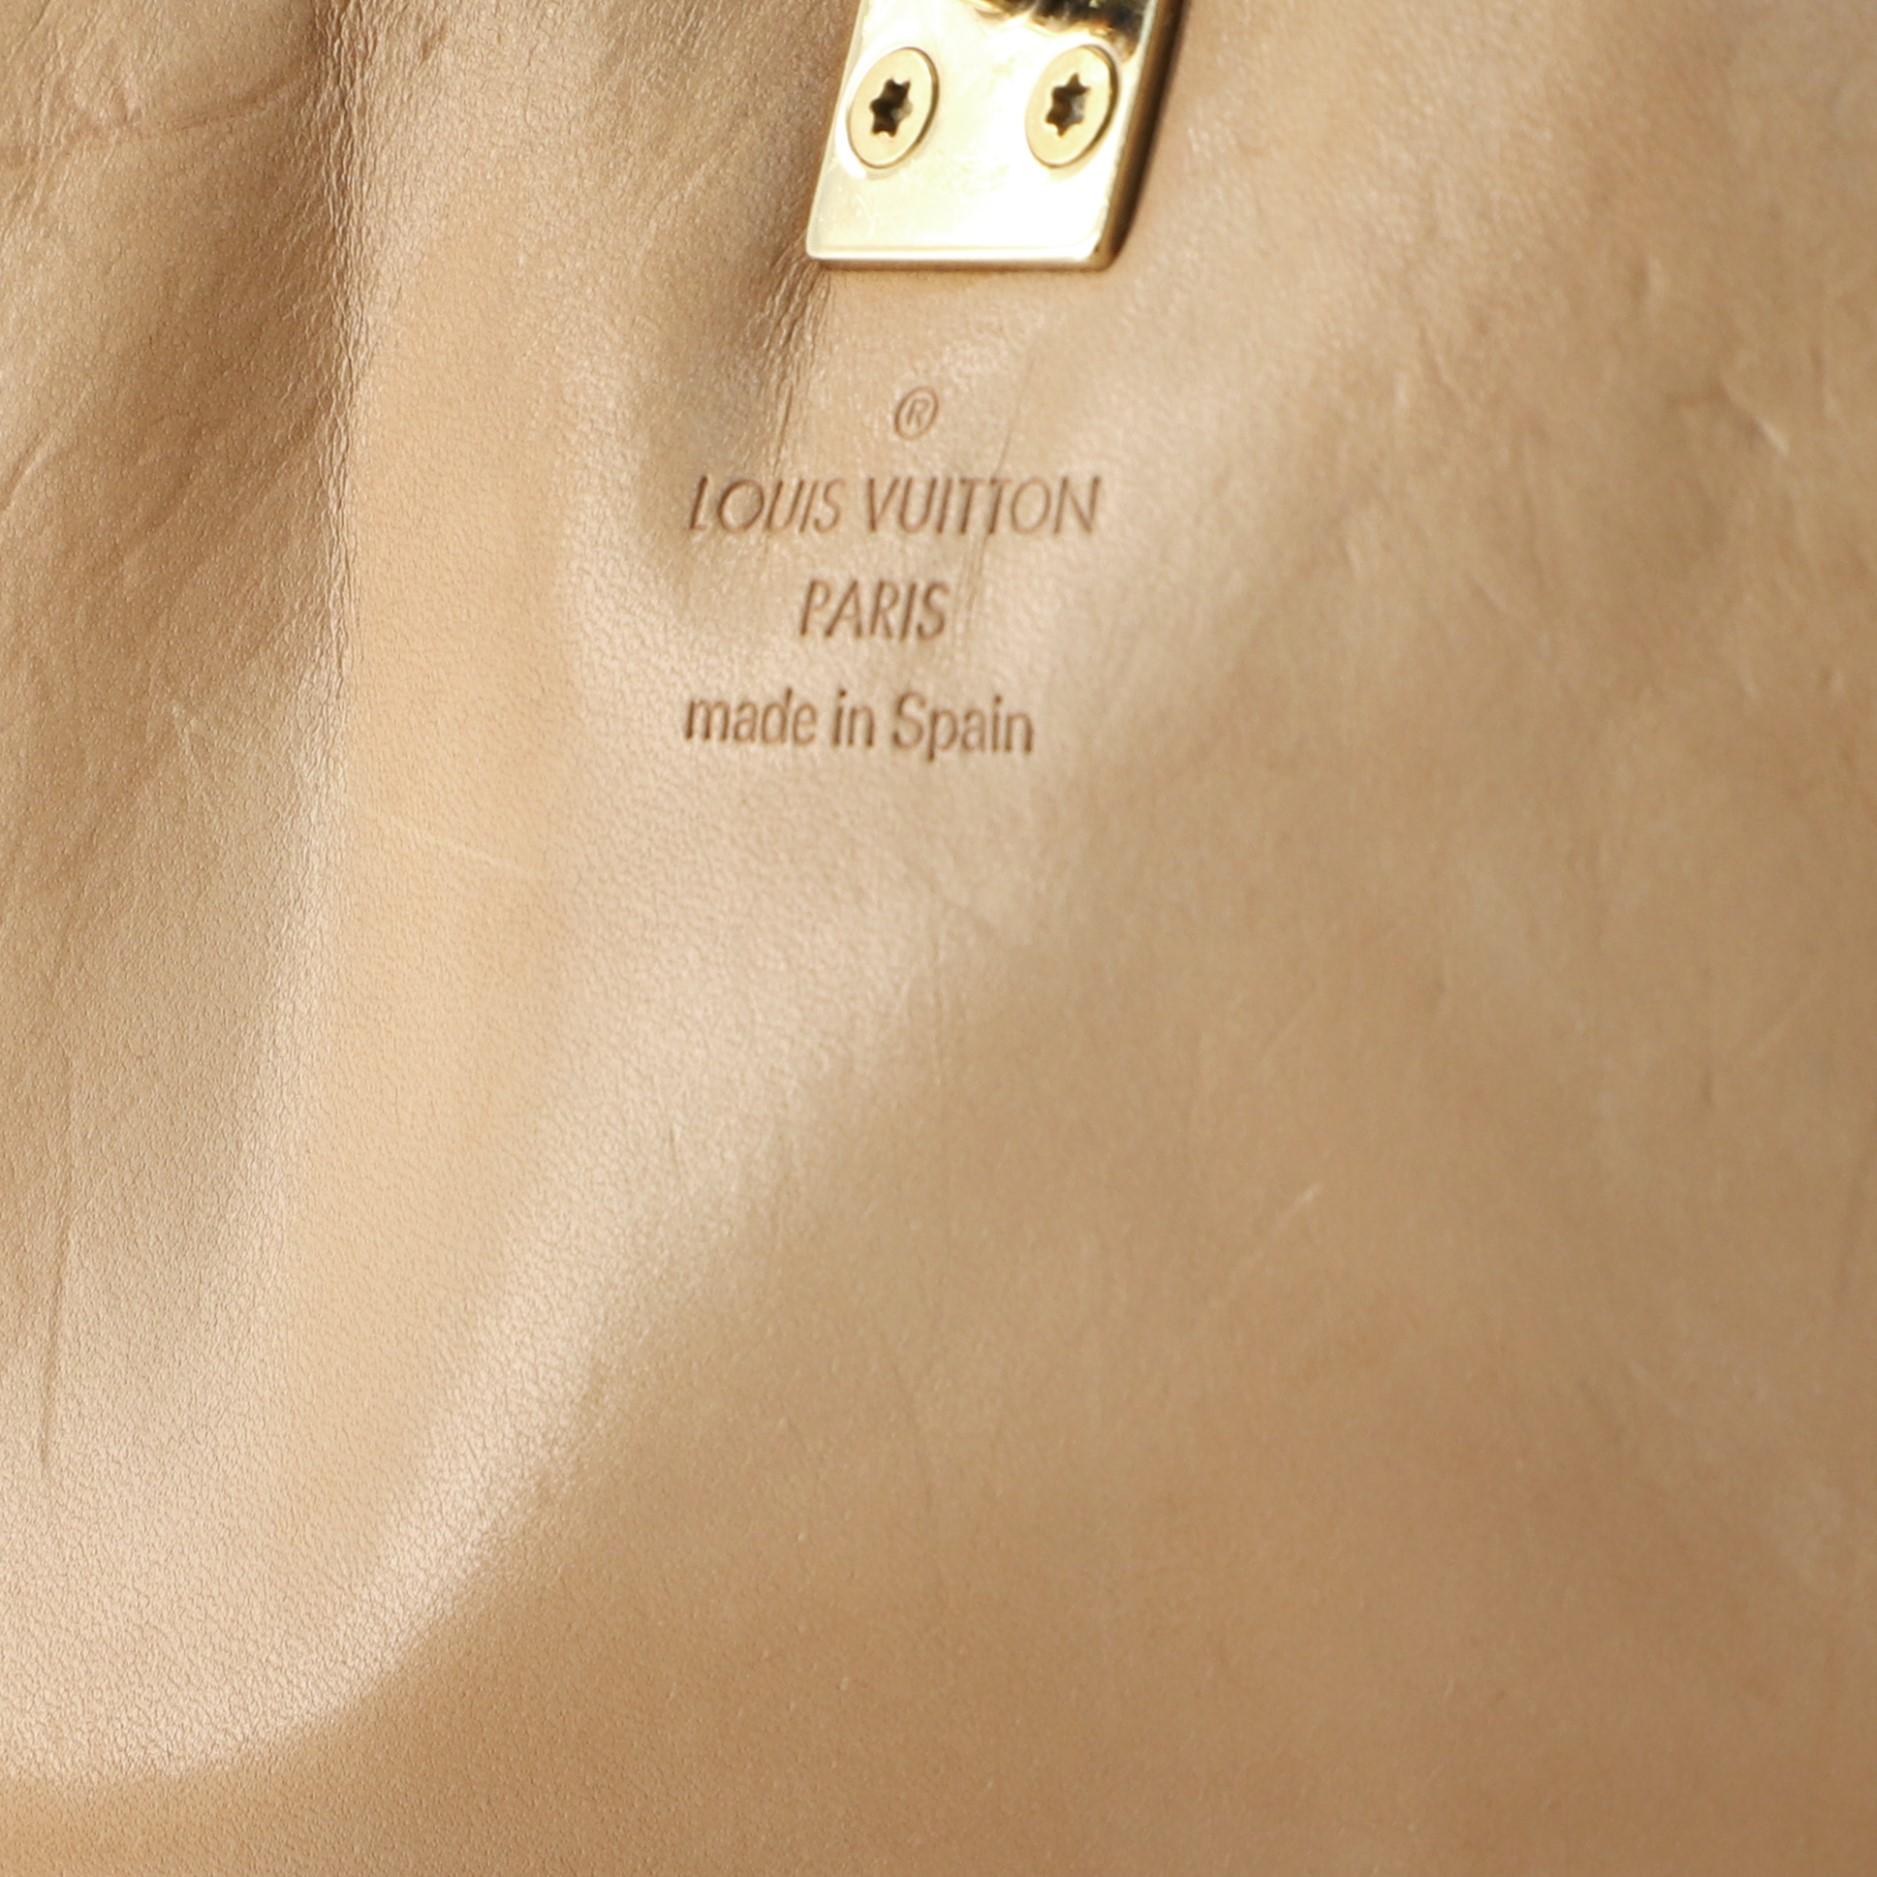 Louis Vuitton Retro Bag Limited Edition Cherry Blossom Monogram 4